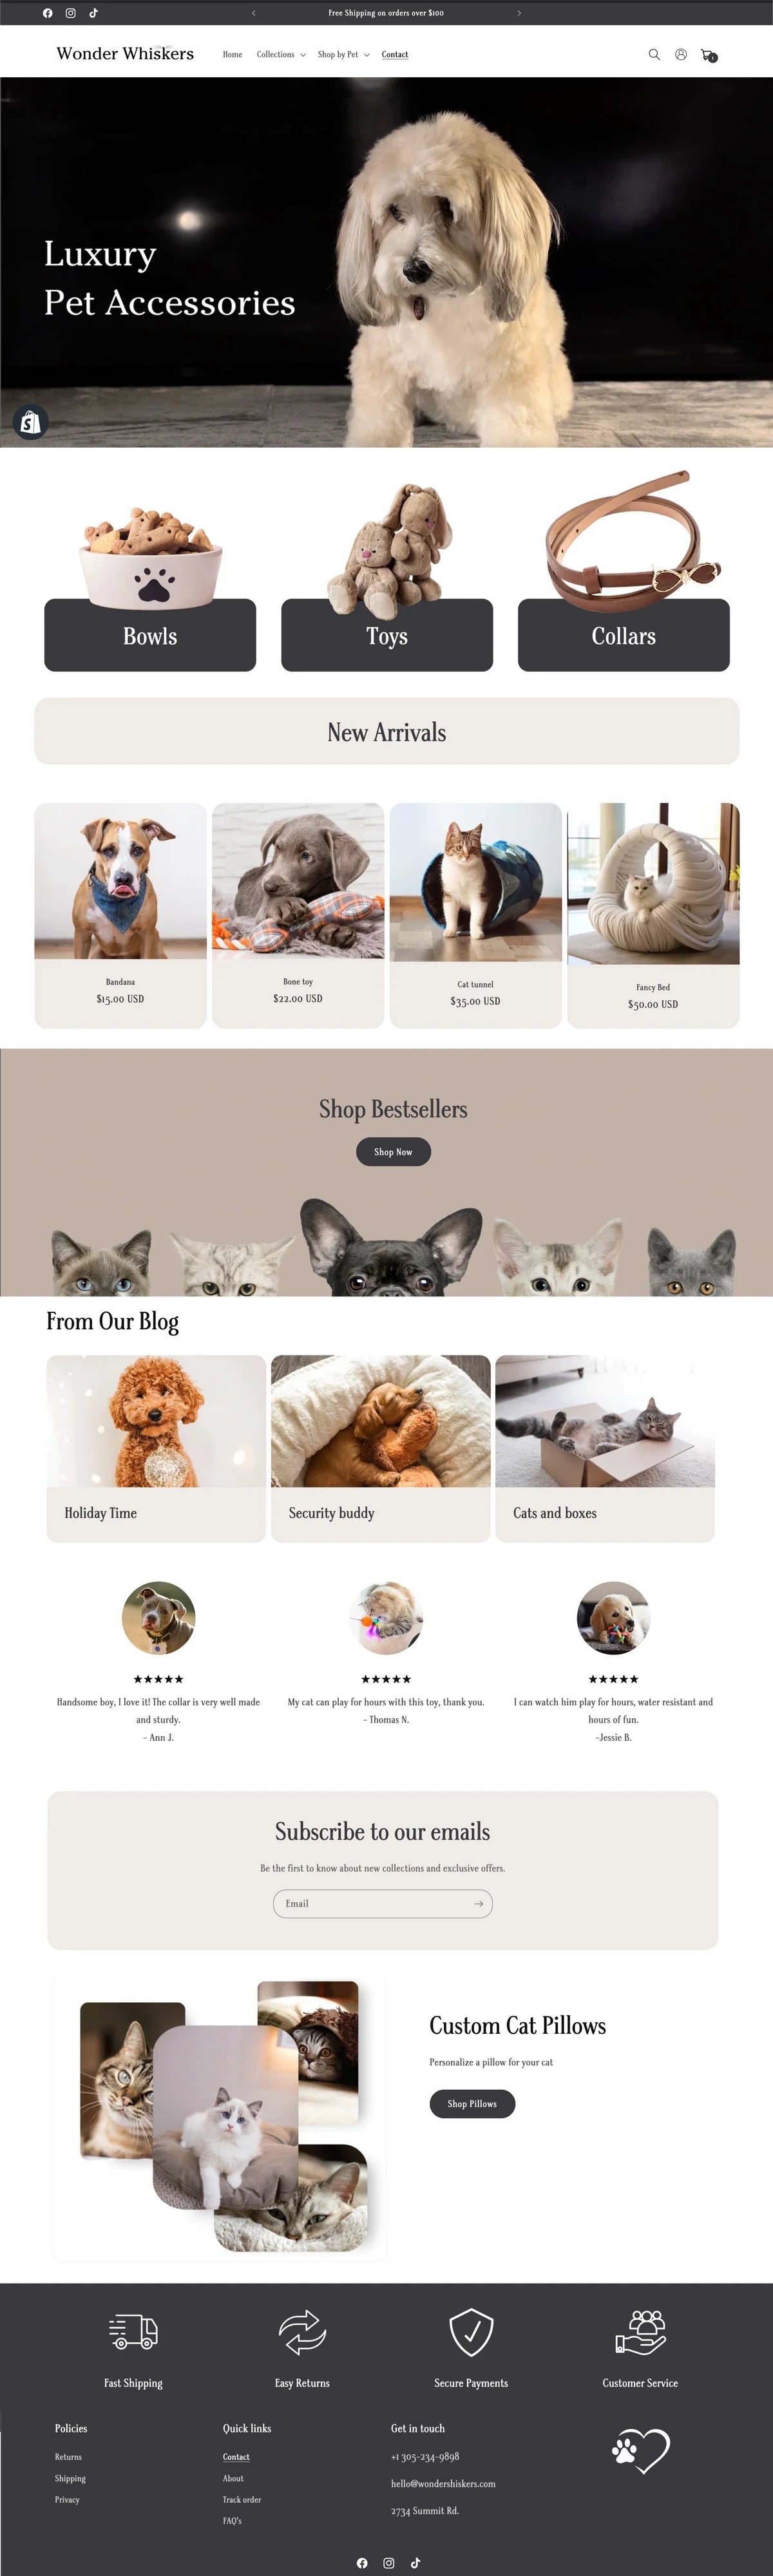 Pet shop website template